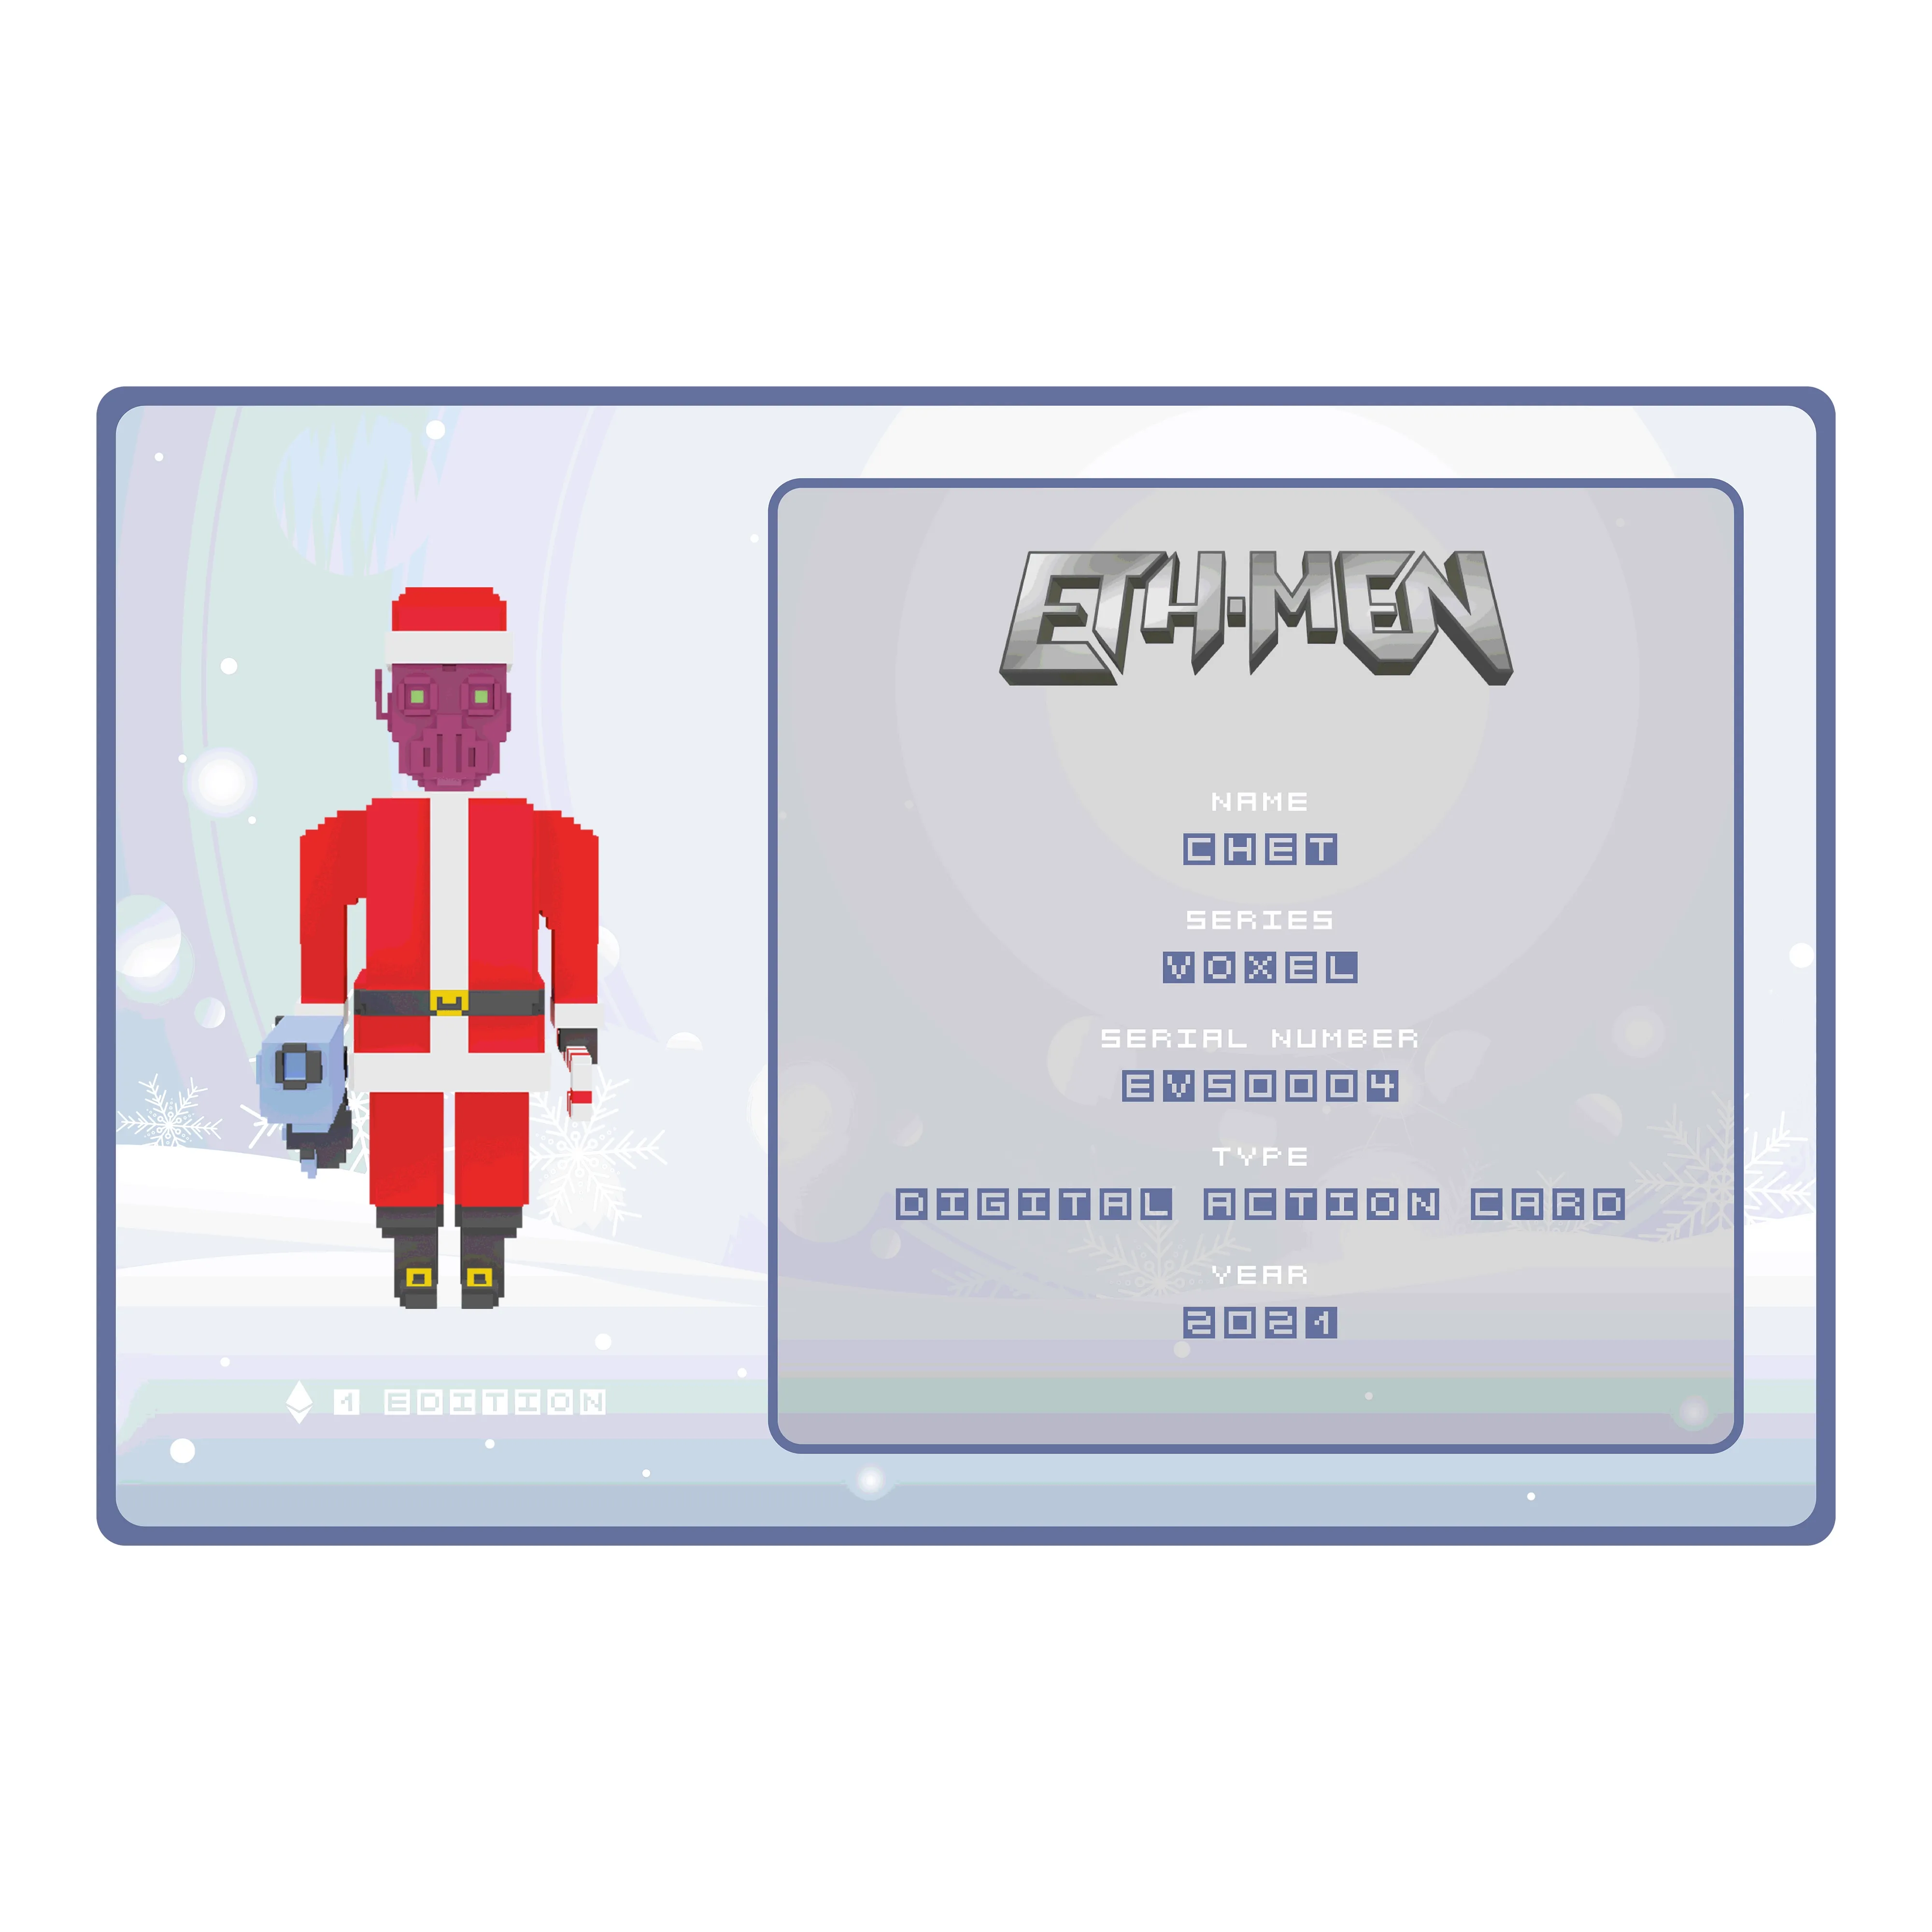 CHET / EVS0004 - Digital Action Card / ETH-MEN Exclusive